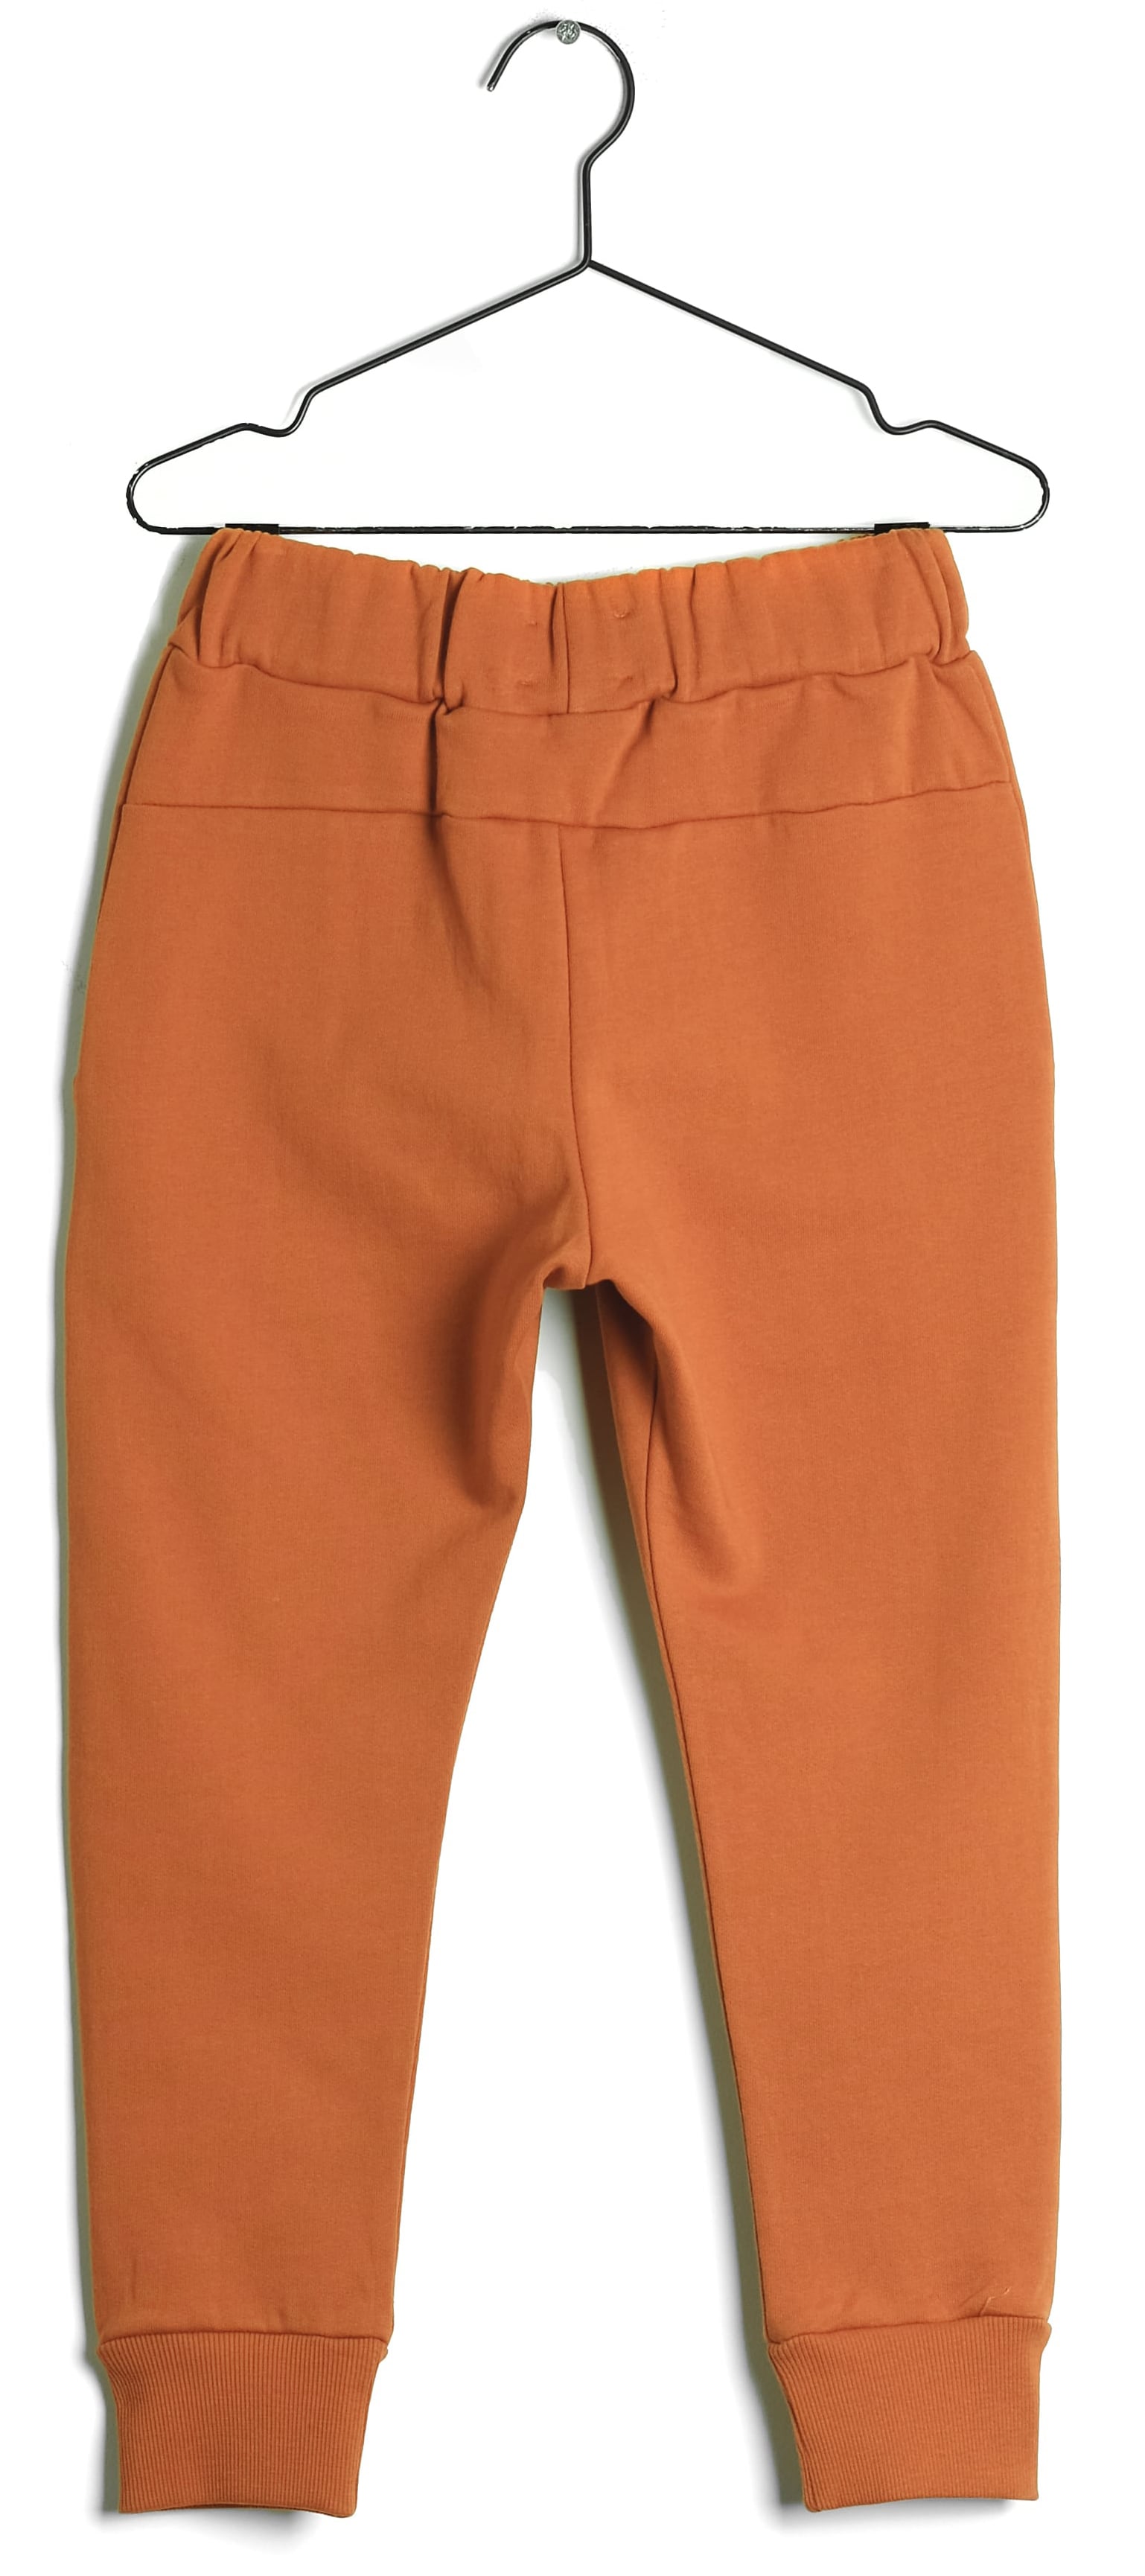 Boys & Girls Orange Cotton Trousers